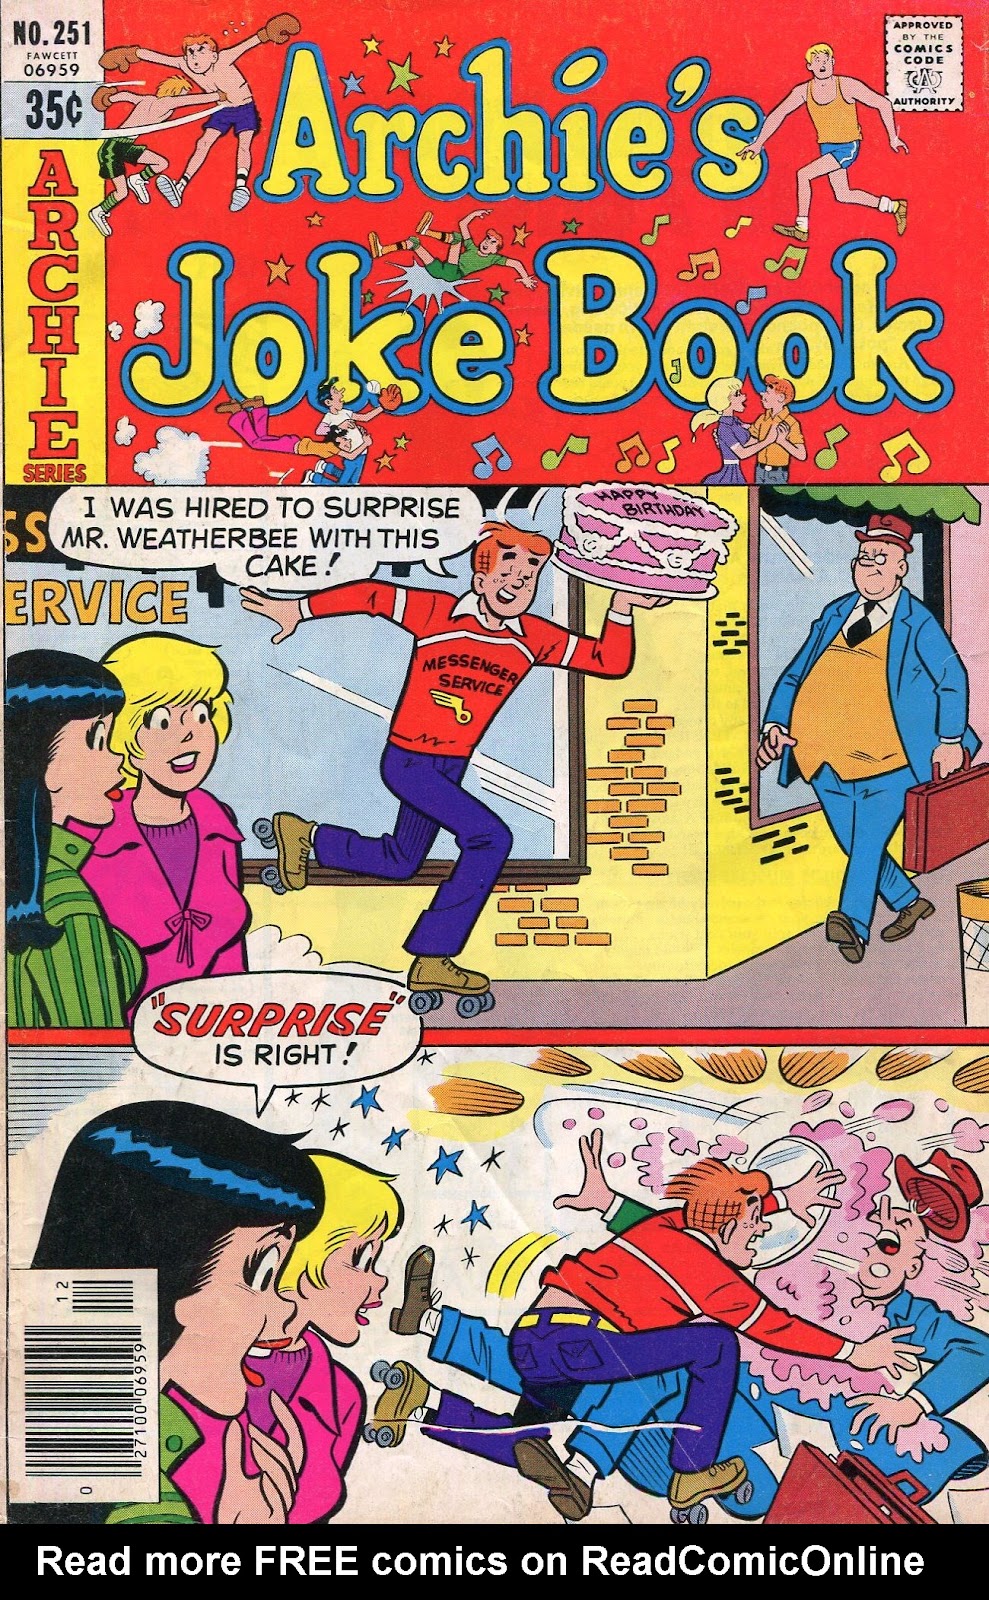 Archie's Joke Book Magazine issue 251 - Page 1